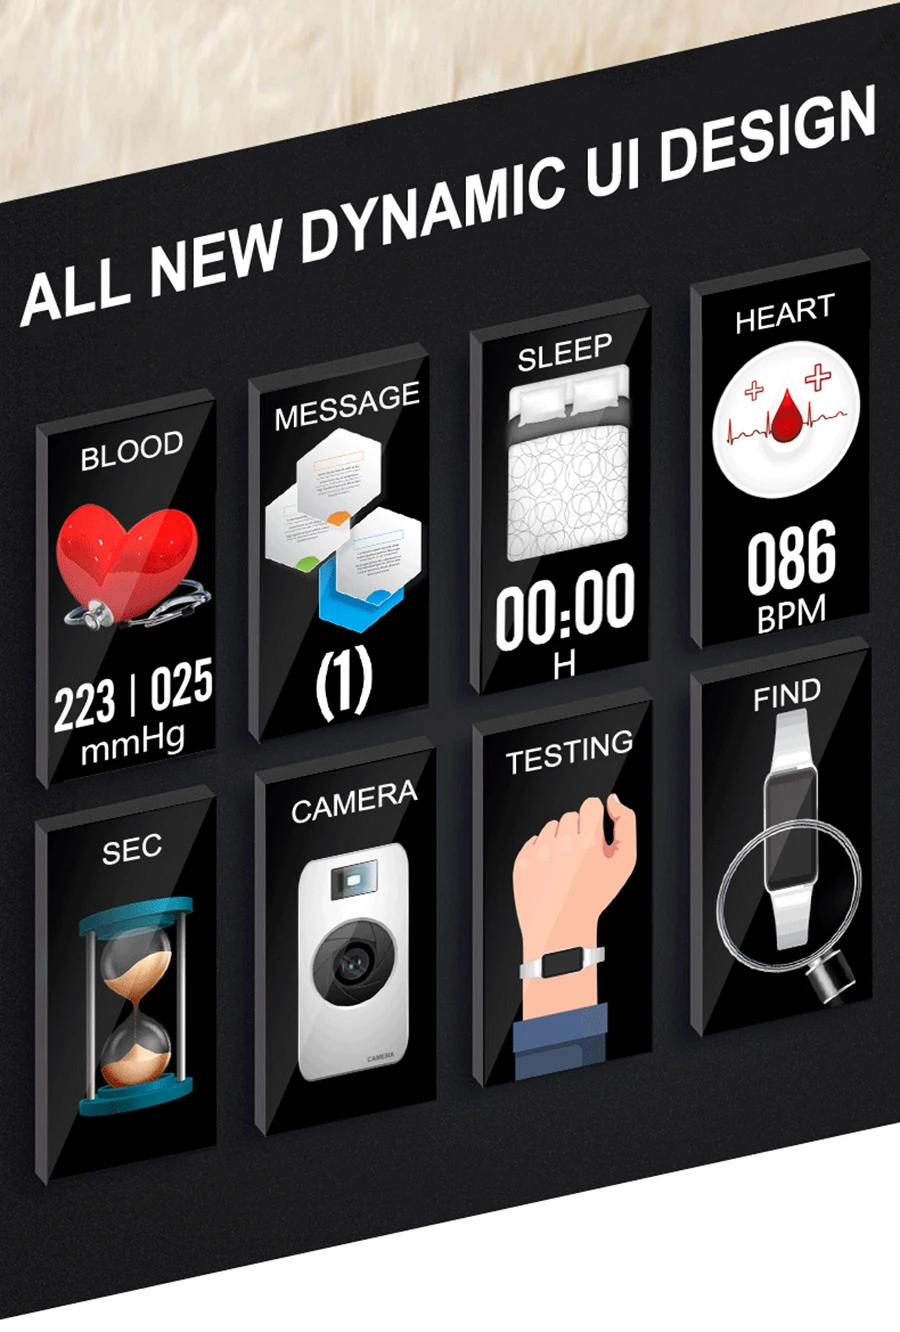 H8 PK IWO8 9 Модные Смарт-часы для женщин водонепроницаемые HeartRate мониторинг Bluetooth для Android IOS фитнес-трек Bcelet Smartwatch